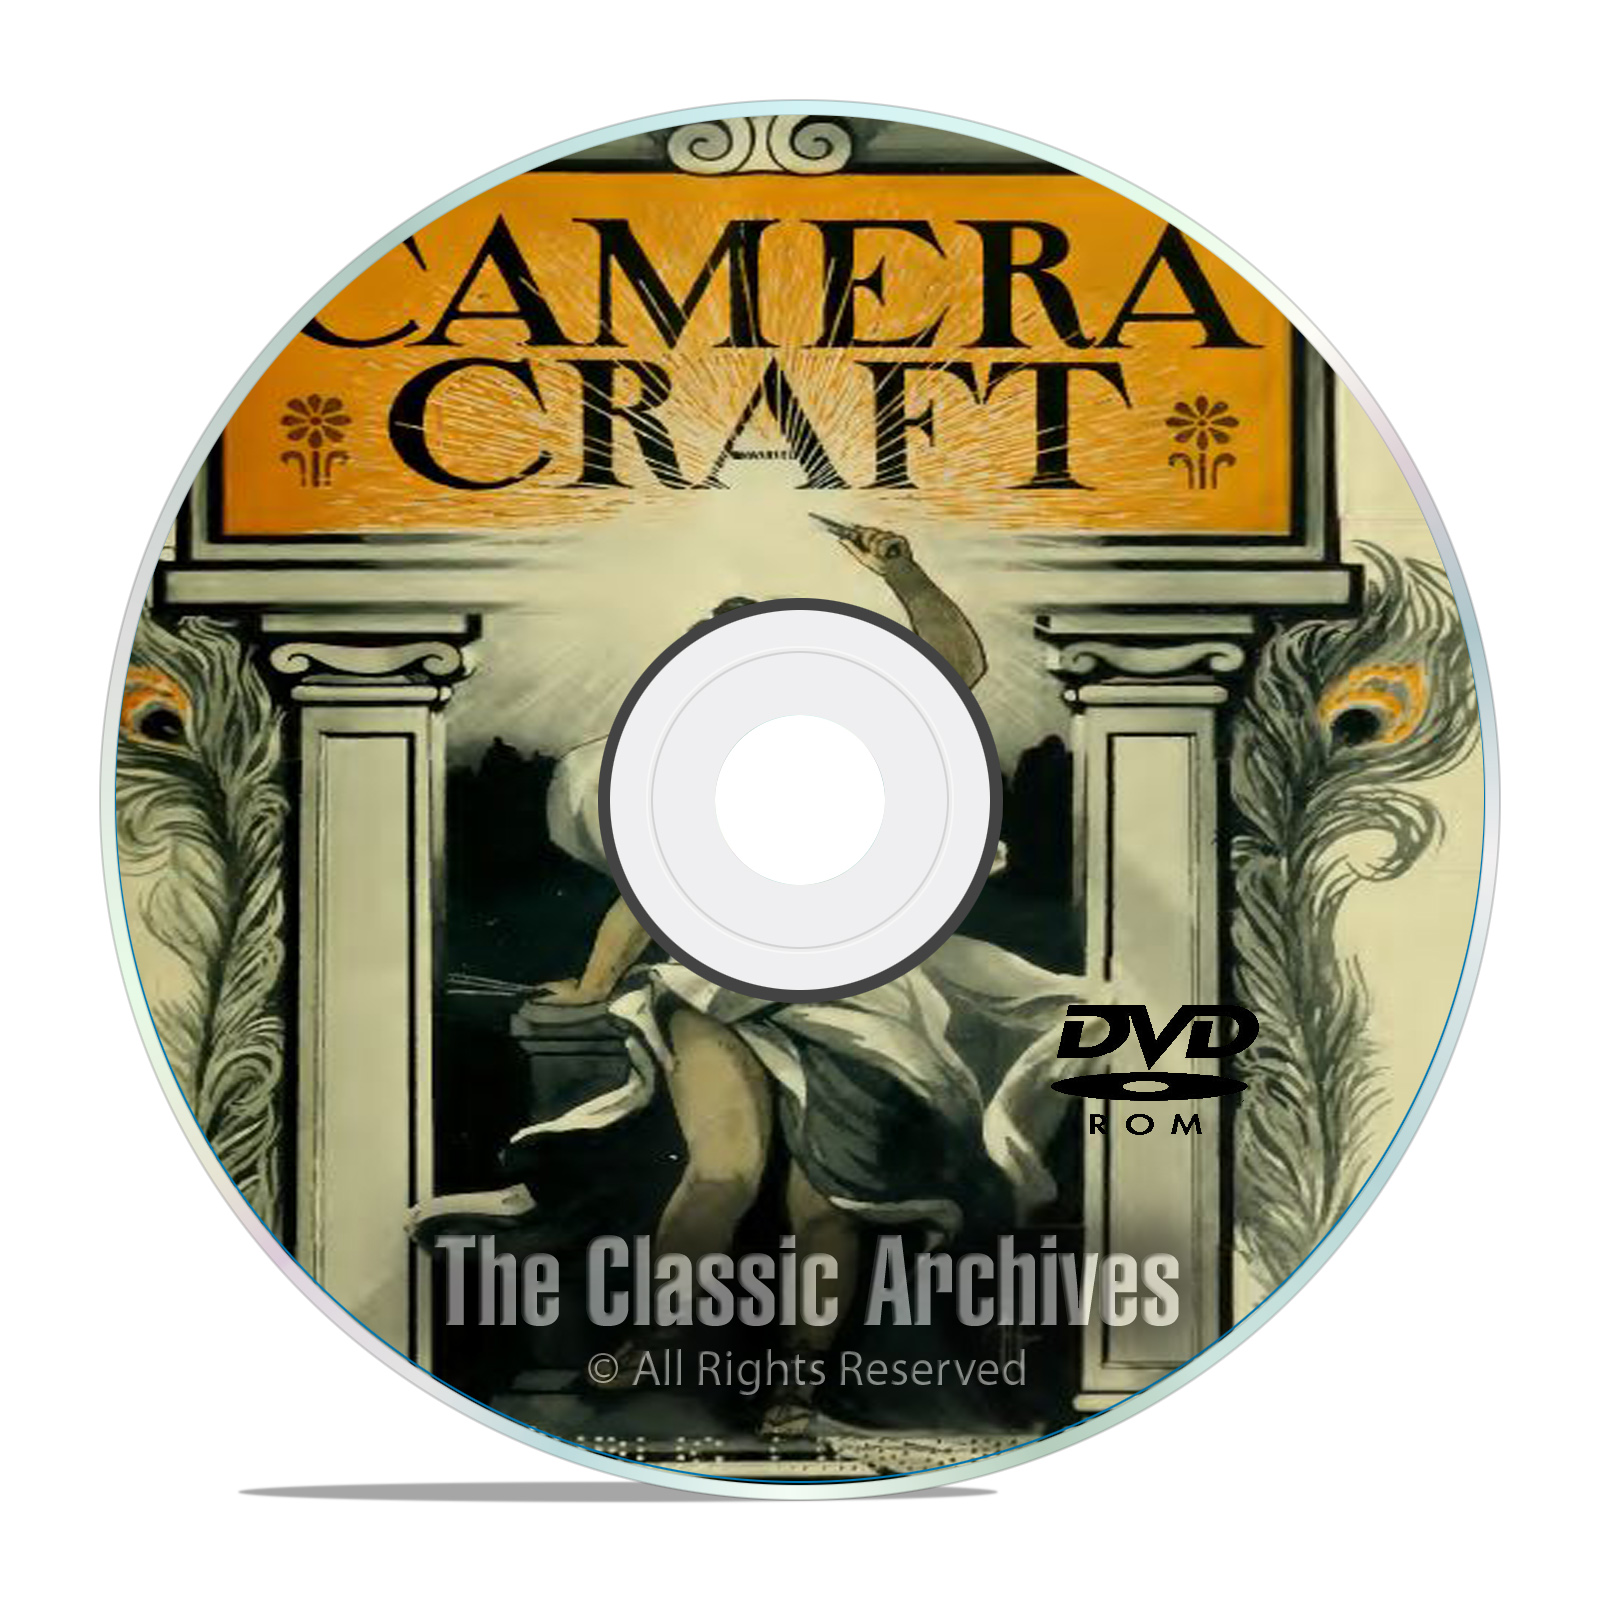 Camera Craft Magazine, 490 back issues, World Photography History, PDF DVD